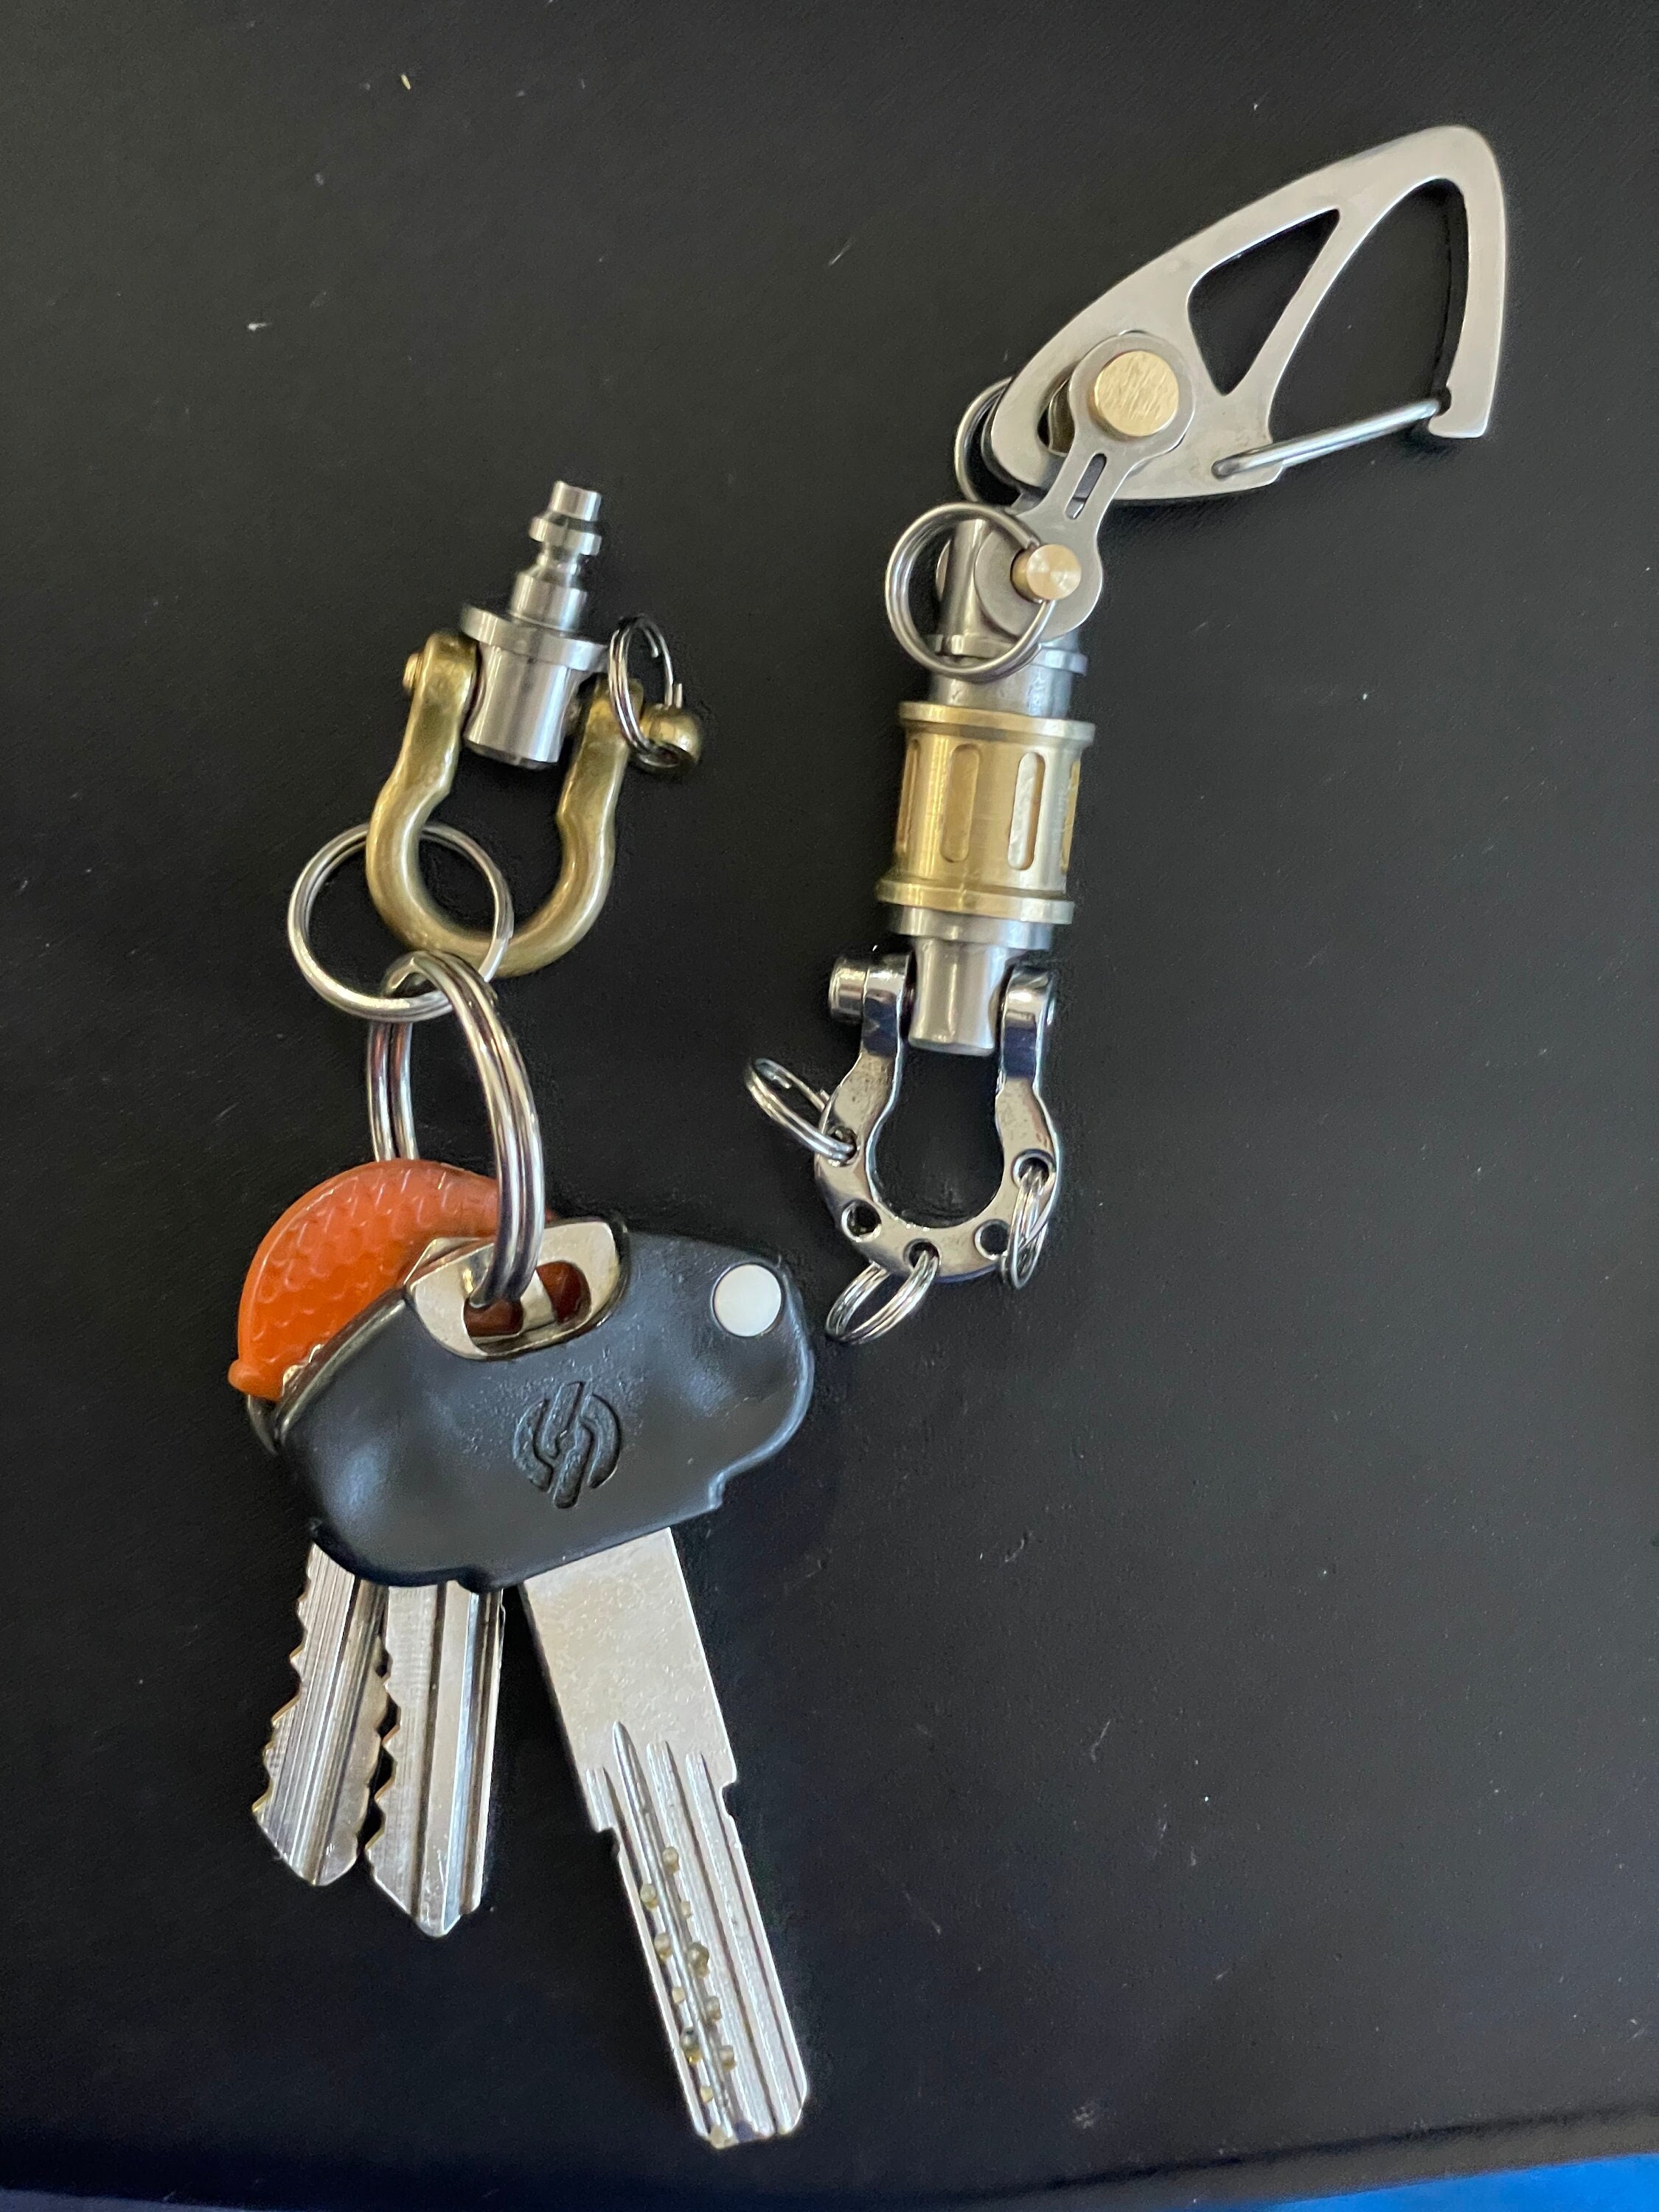 FEGVE Titanium Quick Release Swivel Keychain, Pull Apart Detachable Keychain Heavy Duty Car Key Holder with Side-Pushing Titanium Key Rings